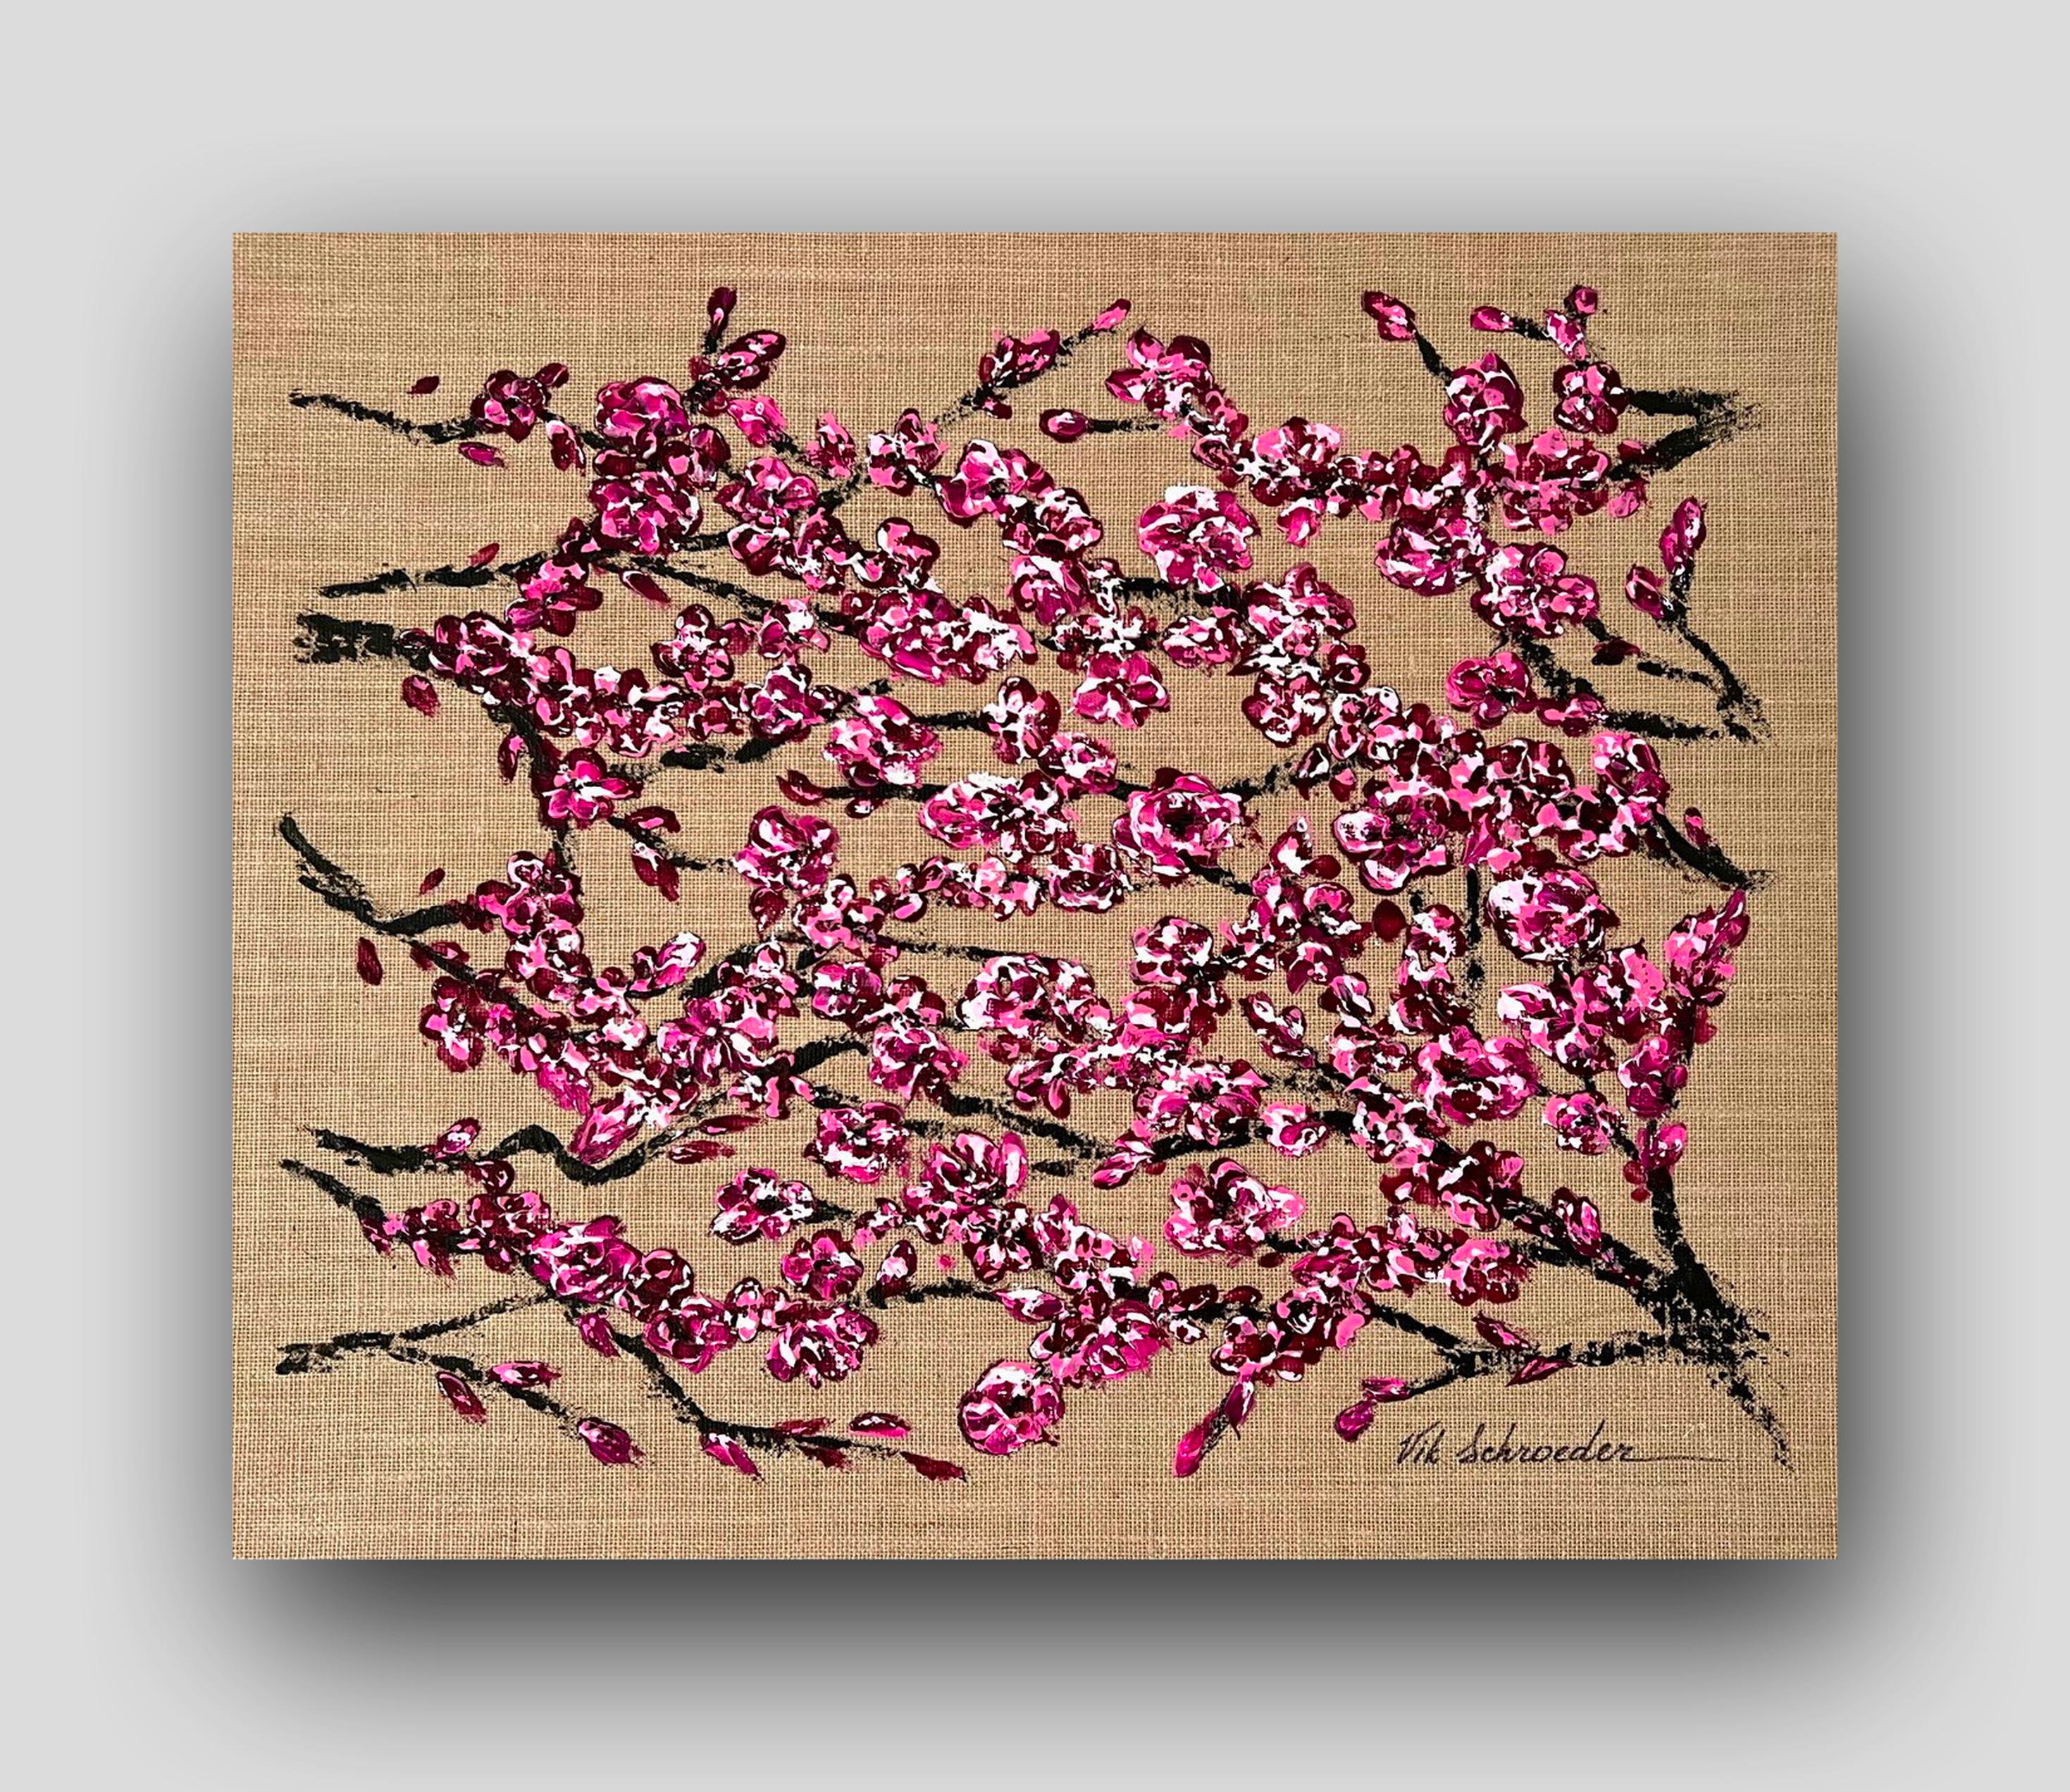  Sakura glamor / Original Gift Art / Blooming trees in spring / 50*60 cm. - Painting by Vik Schroeder 